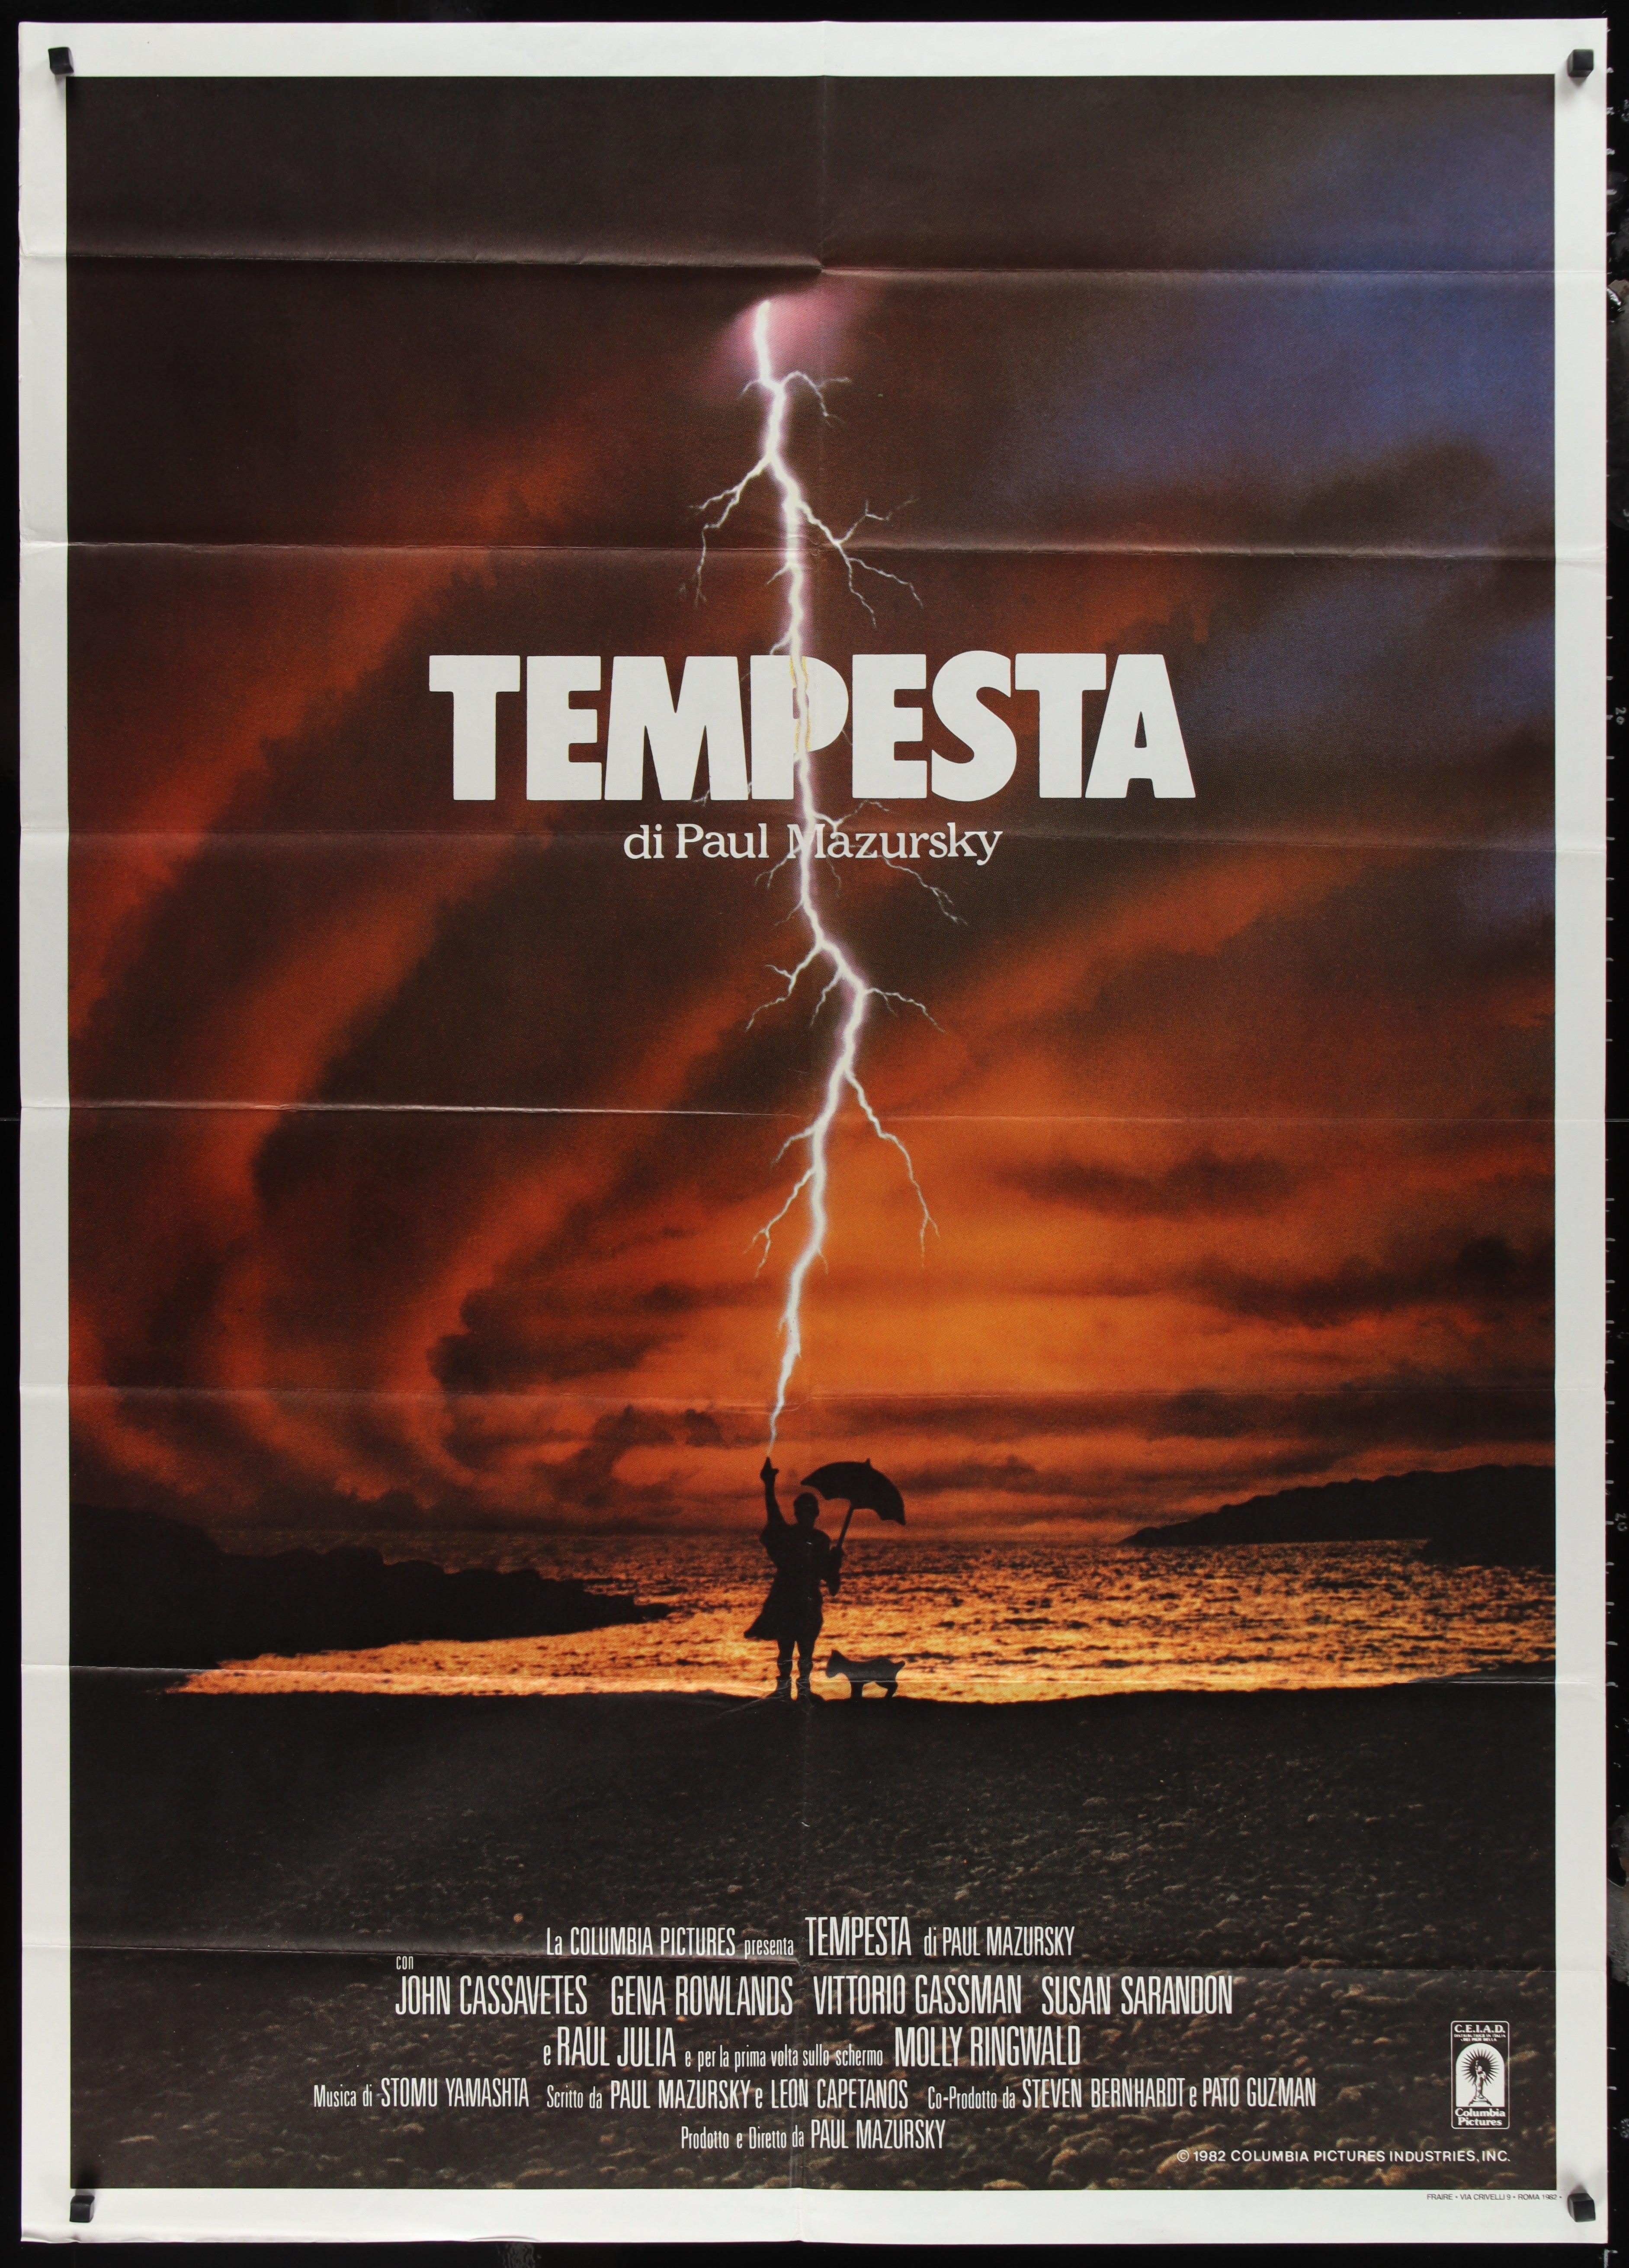 the tempest movie